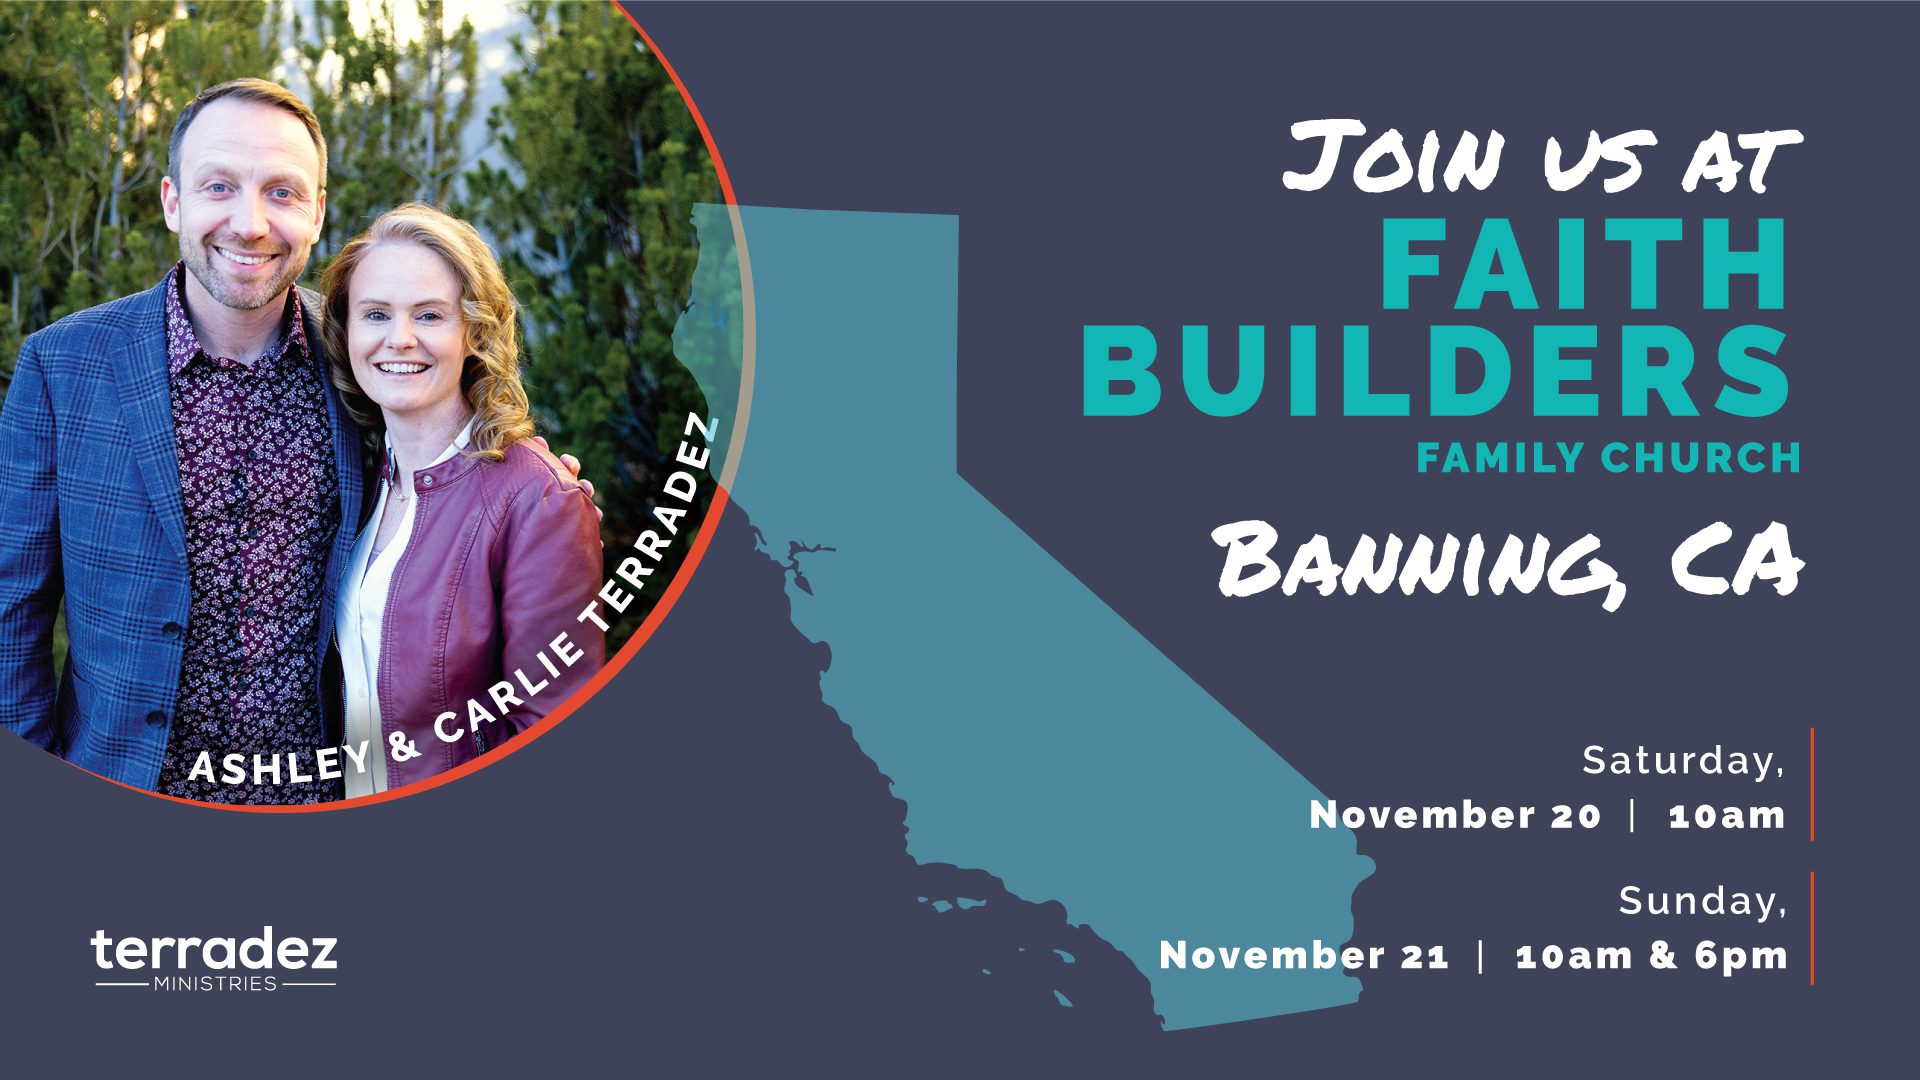 Ashley and Carlie Terradez at Faith Builders Family Church in Banning, California. November 20-21, 2021.